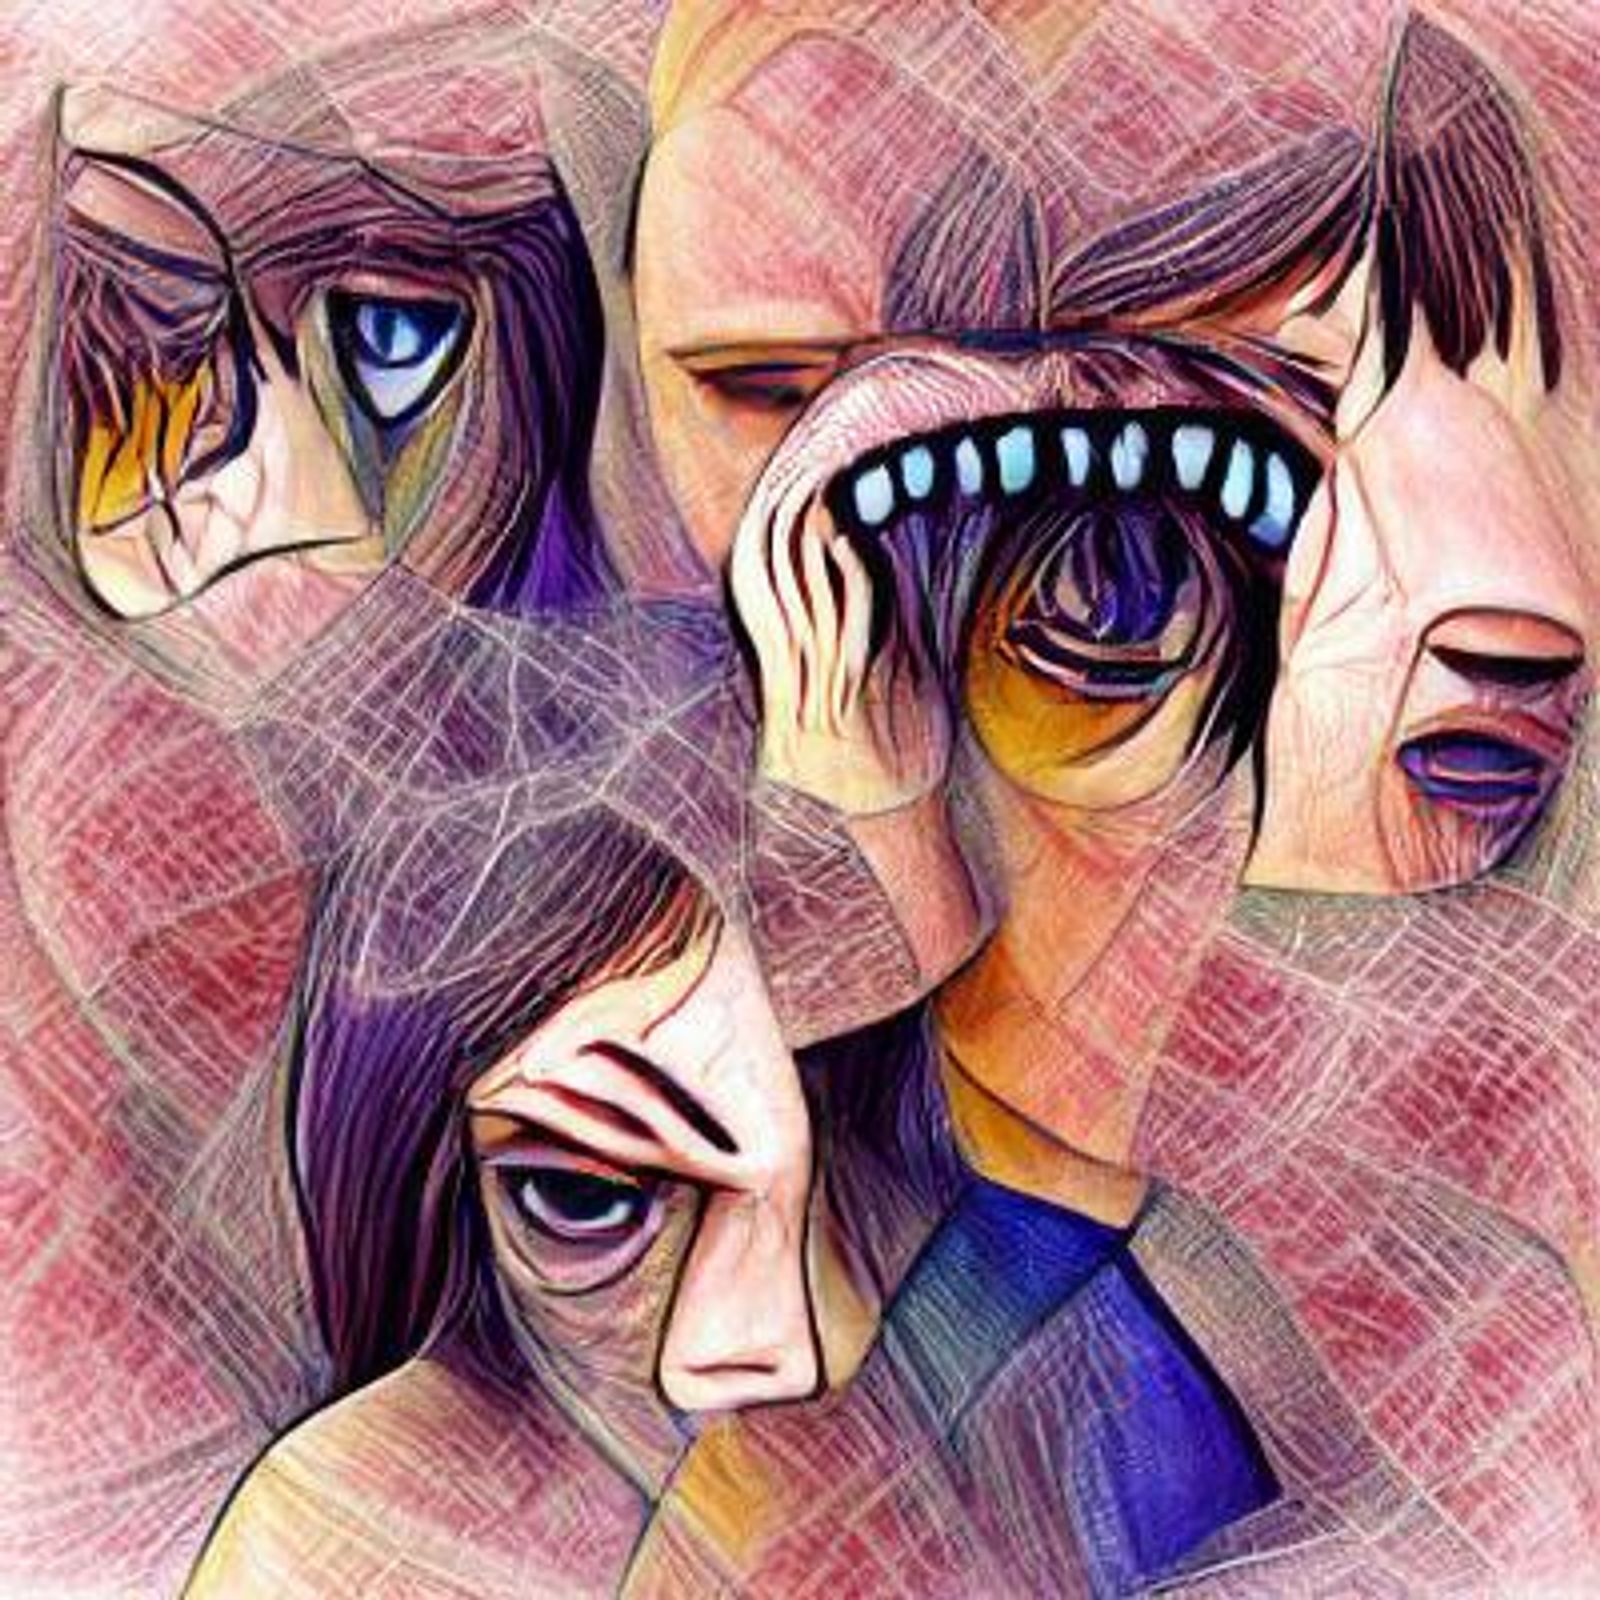 avoidant personality disorder